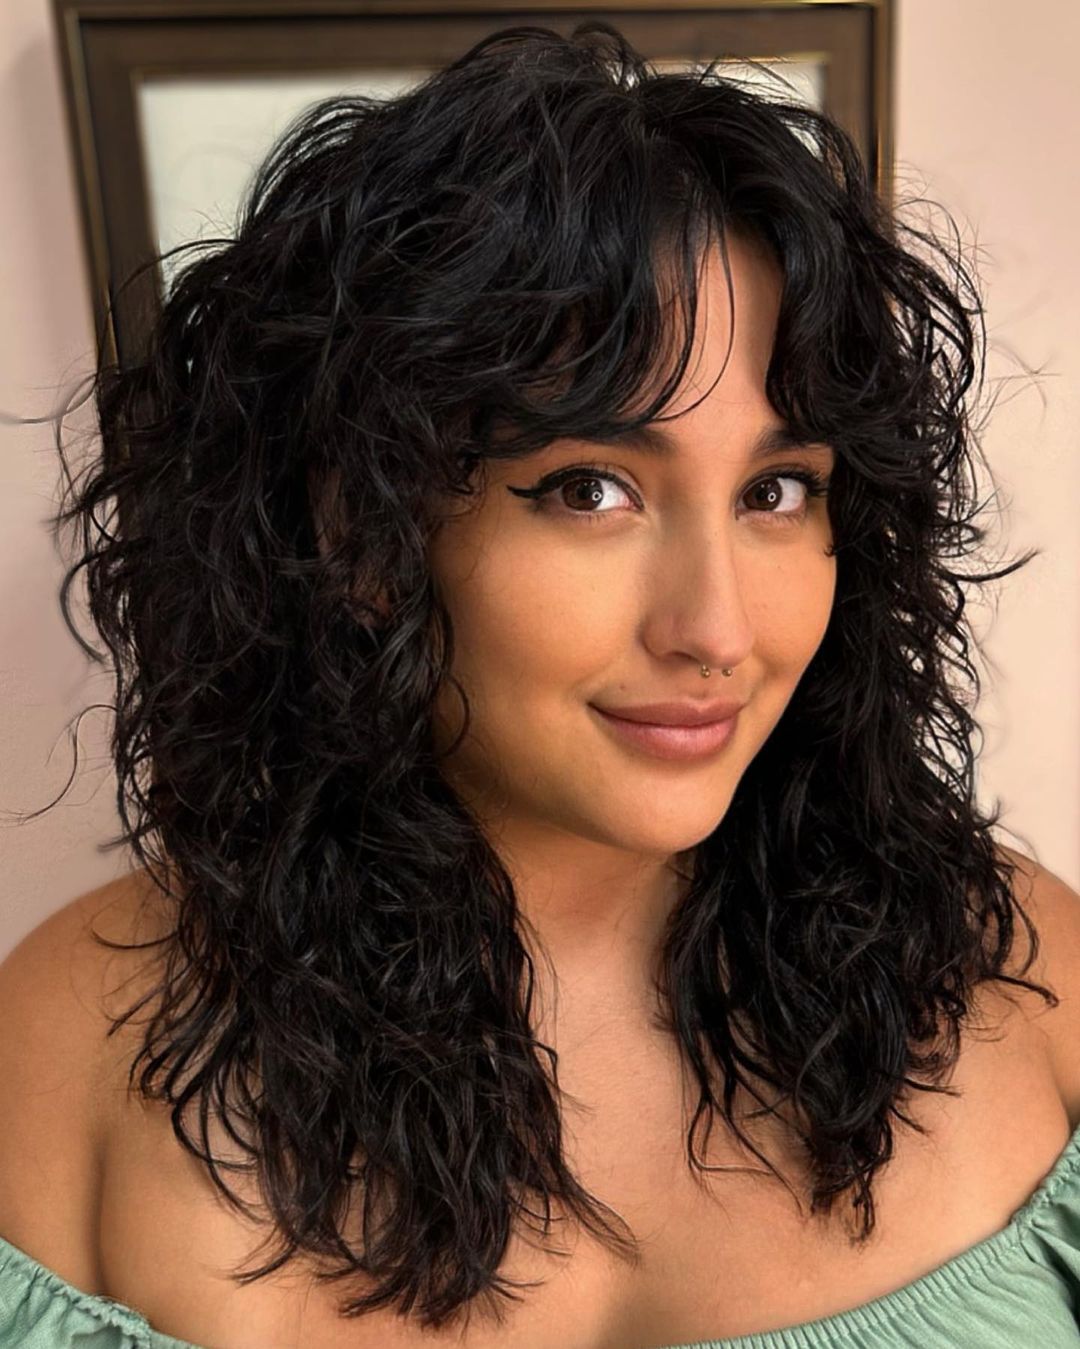 Medium-length curly hair with curtain bangs
